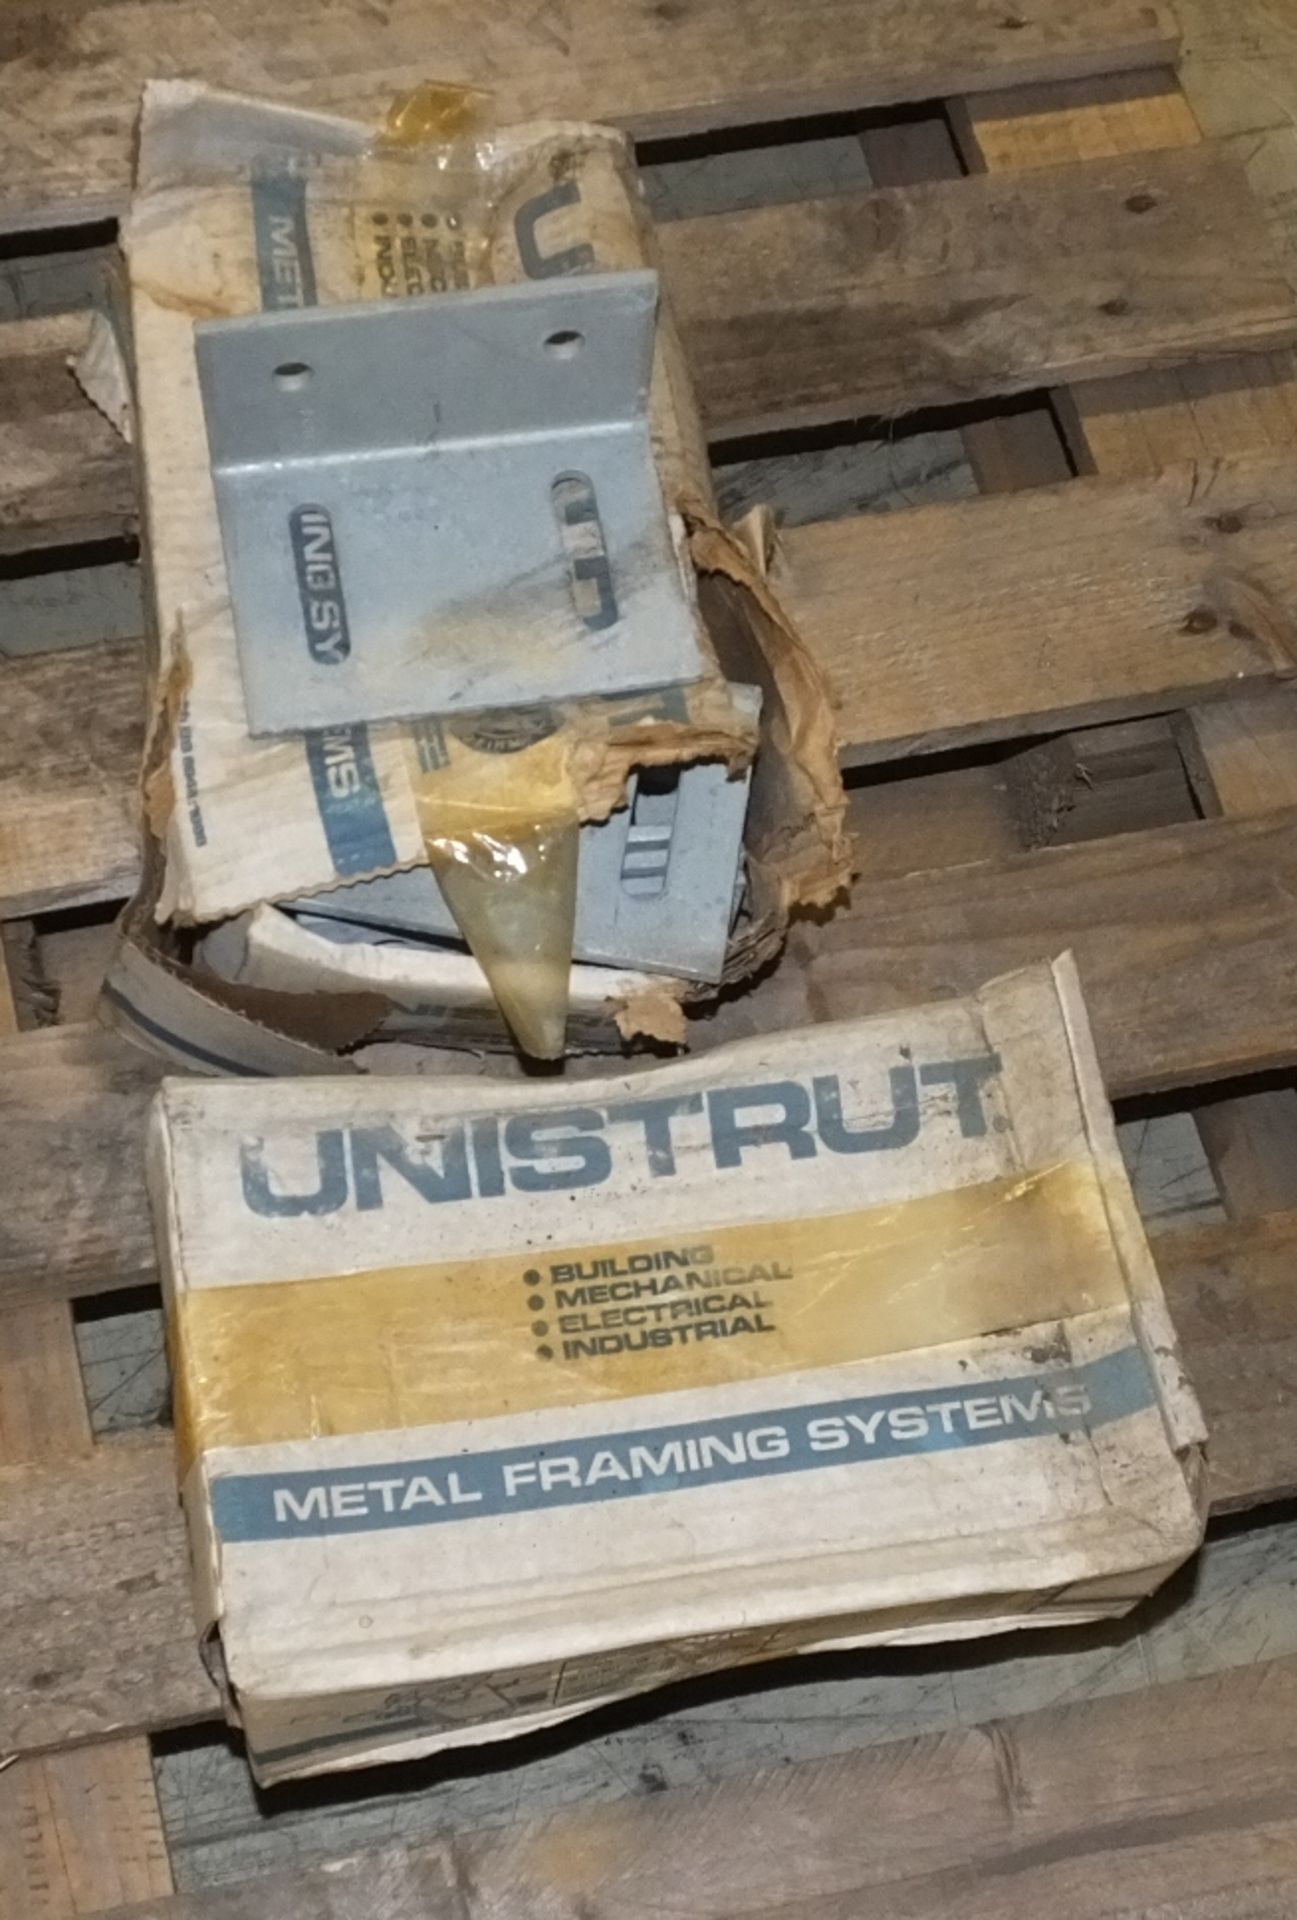 2 boxes of Unitstrut Metal Framing System Plates